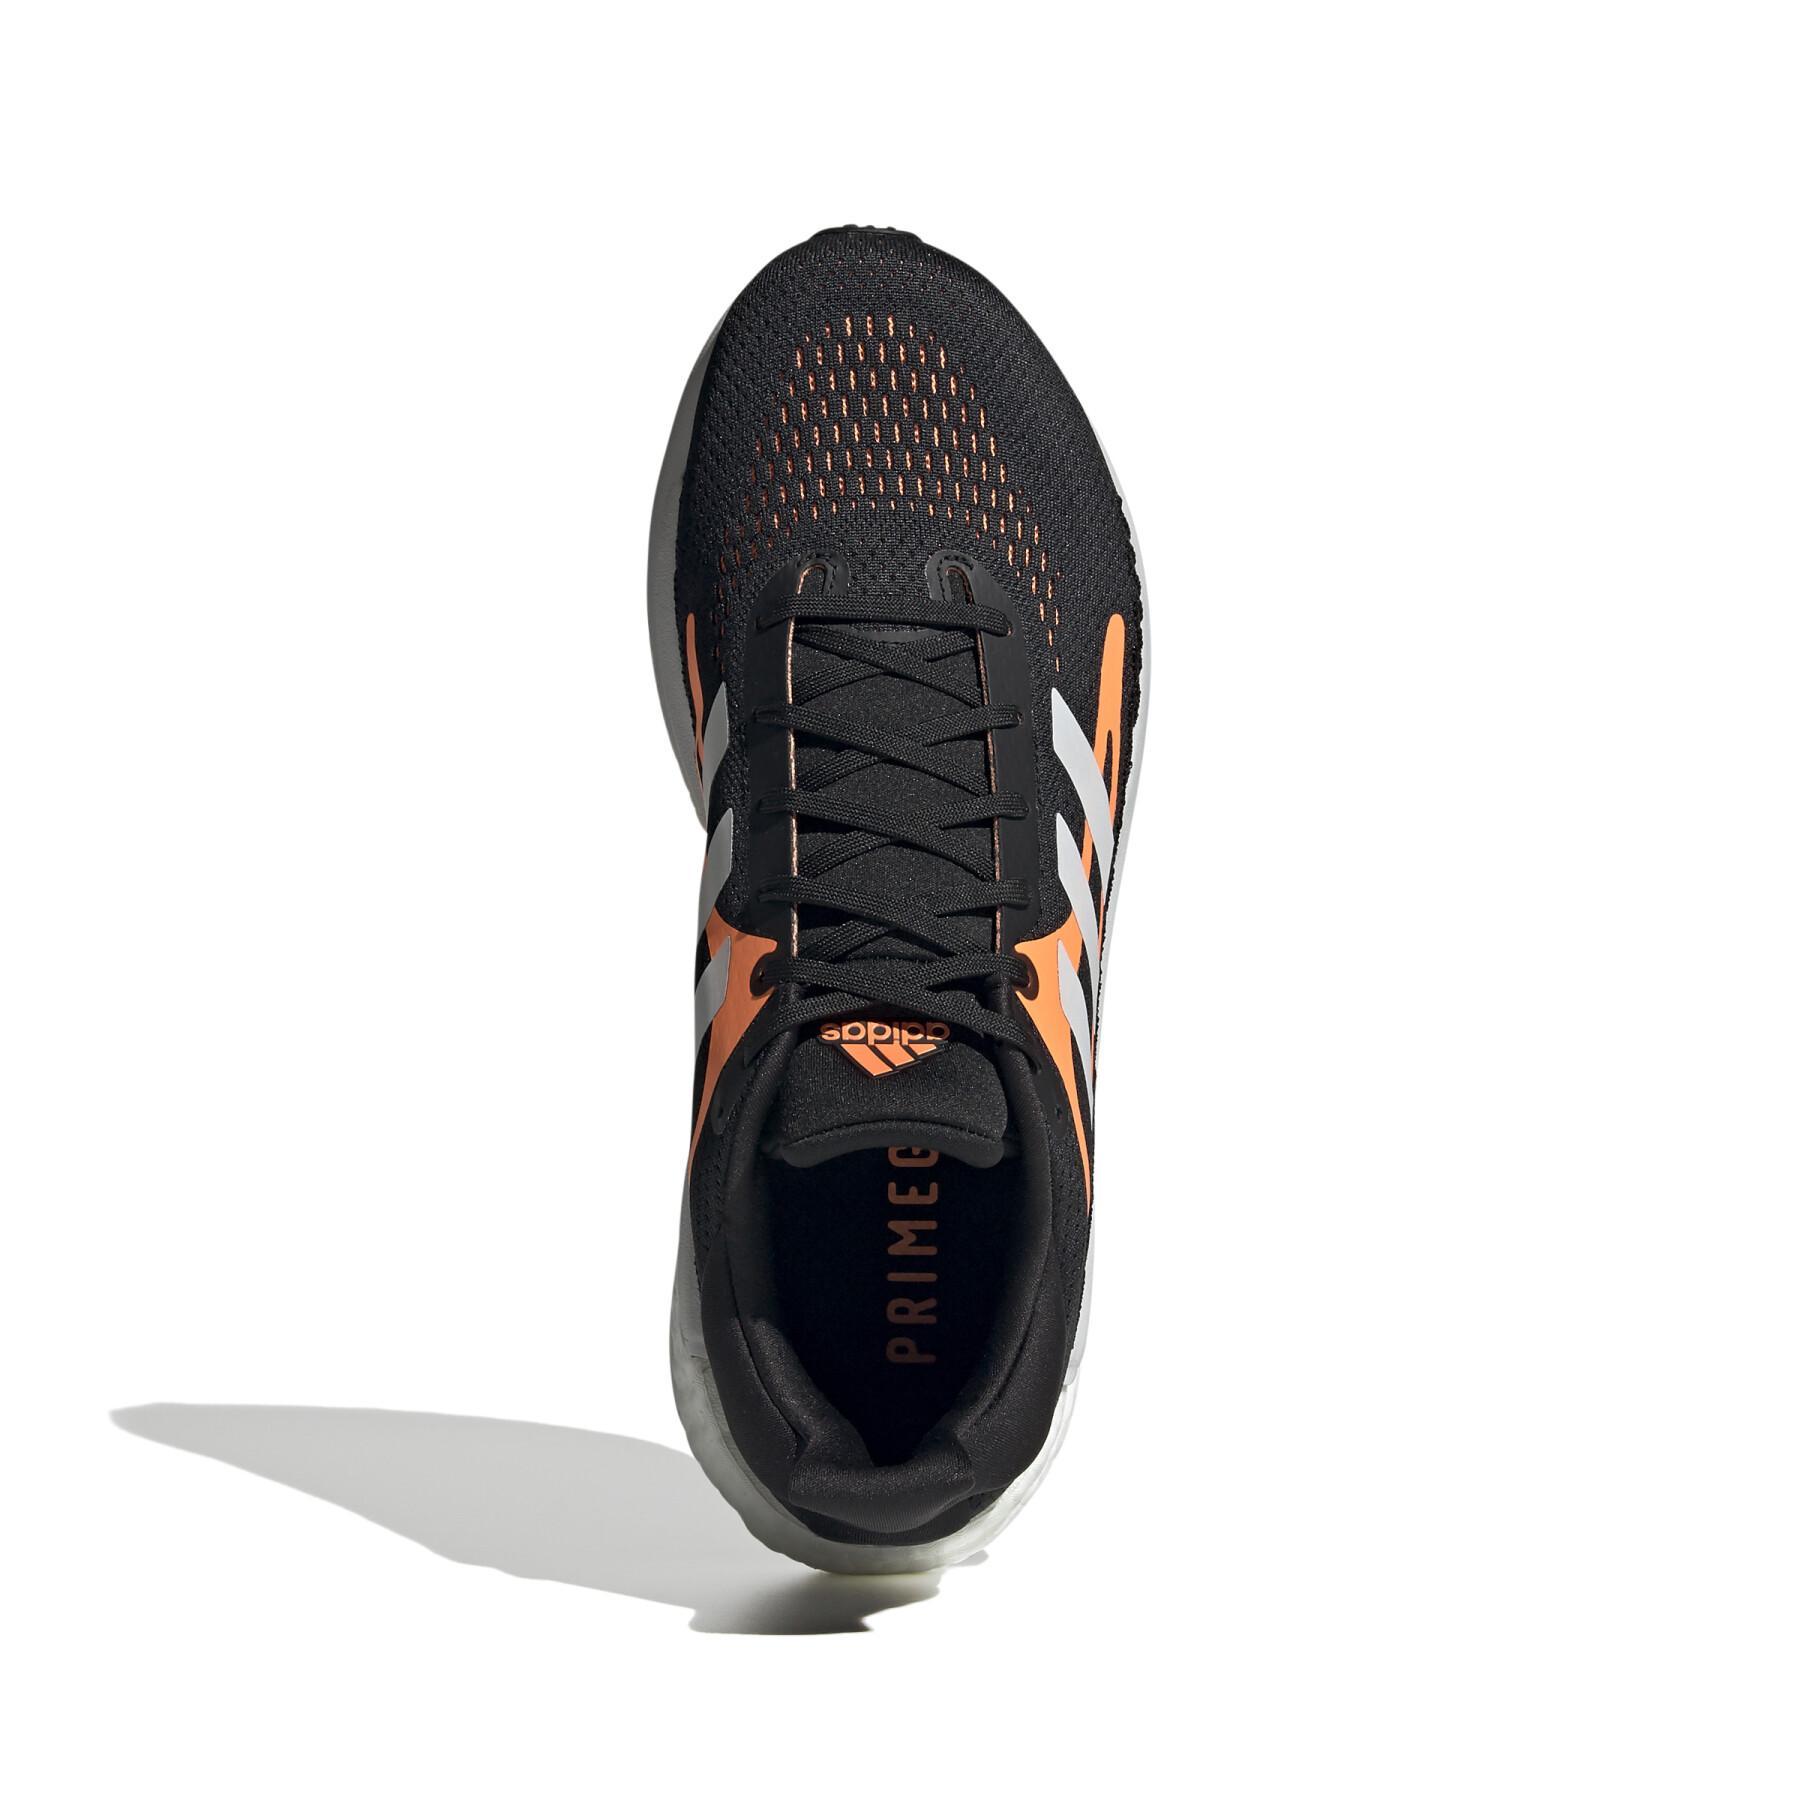 Chaussures de running adidas Solar Glide 3 M